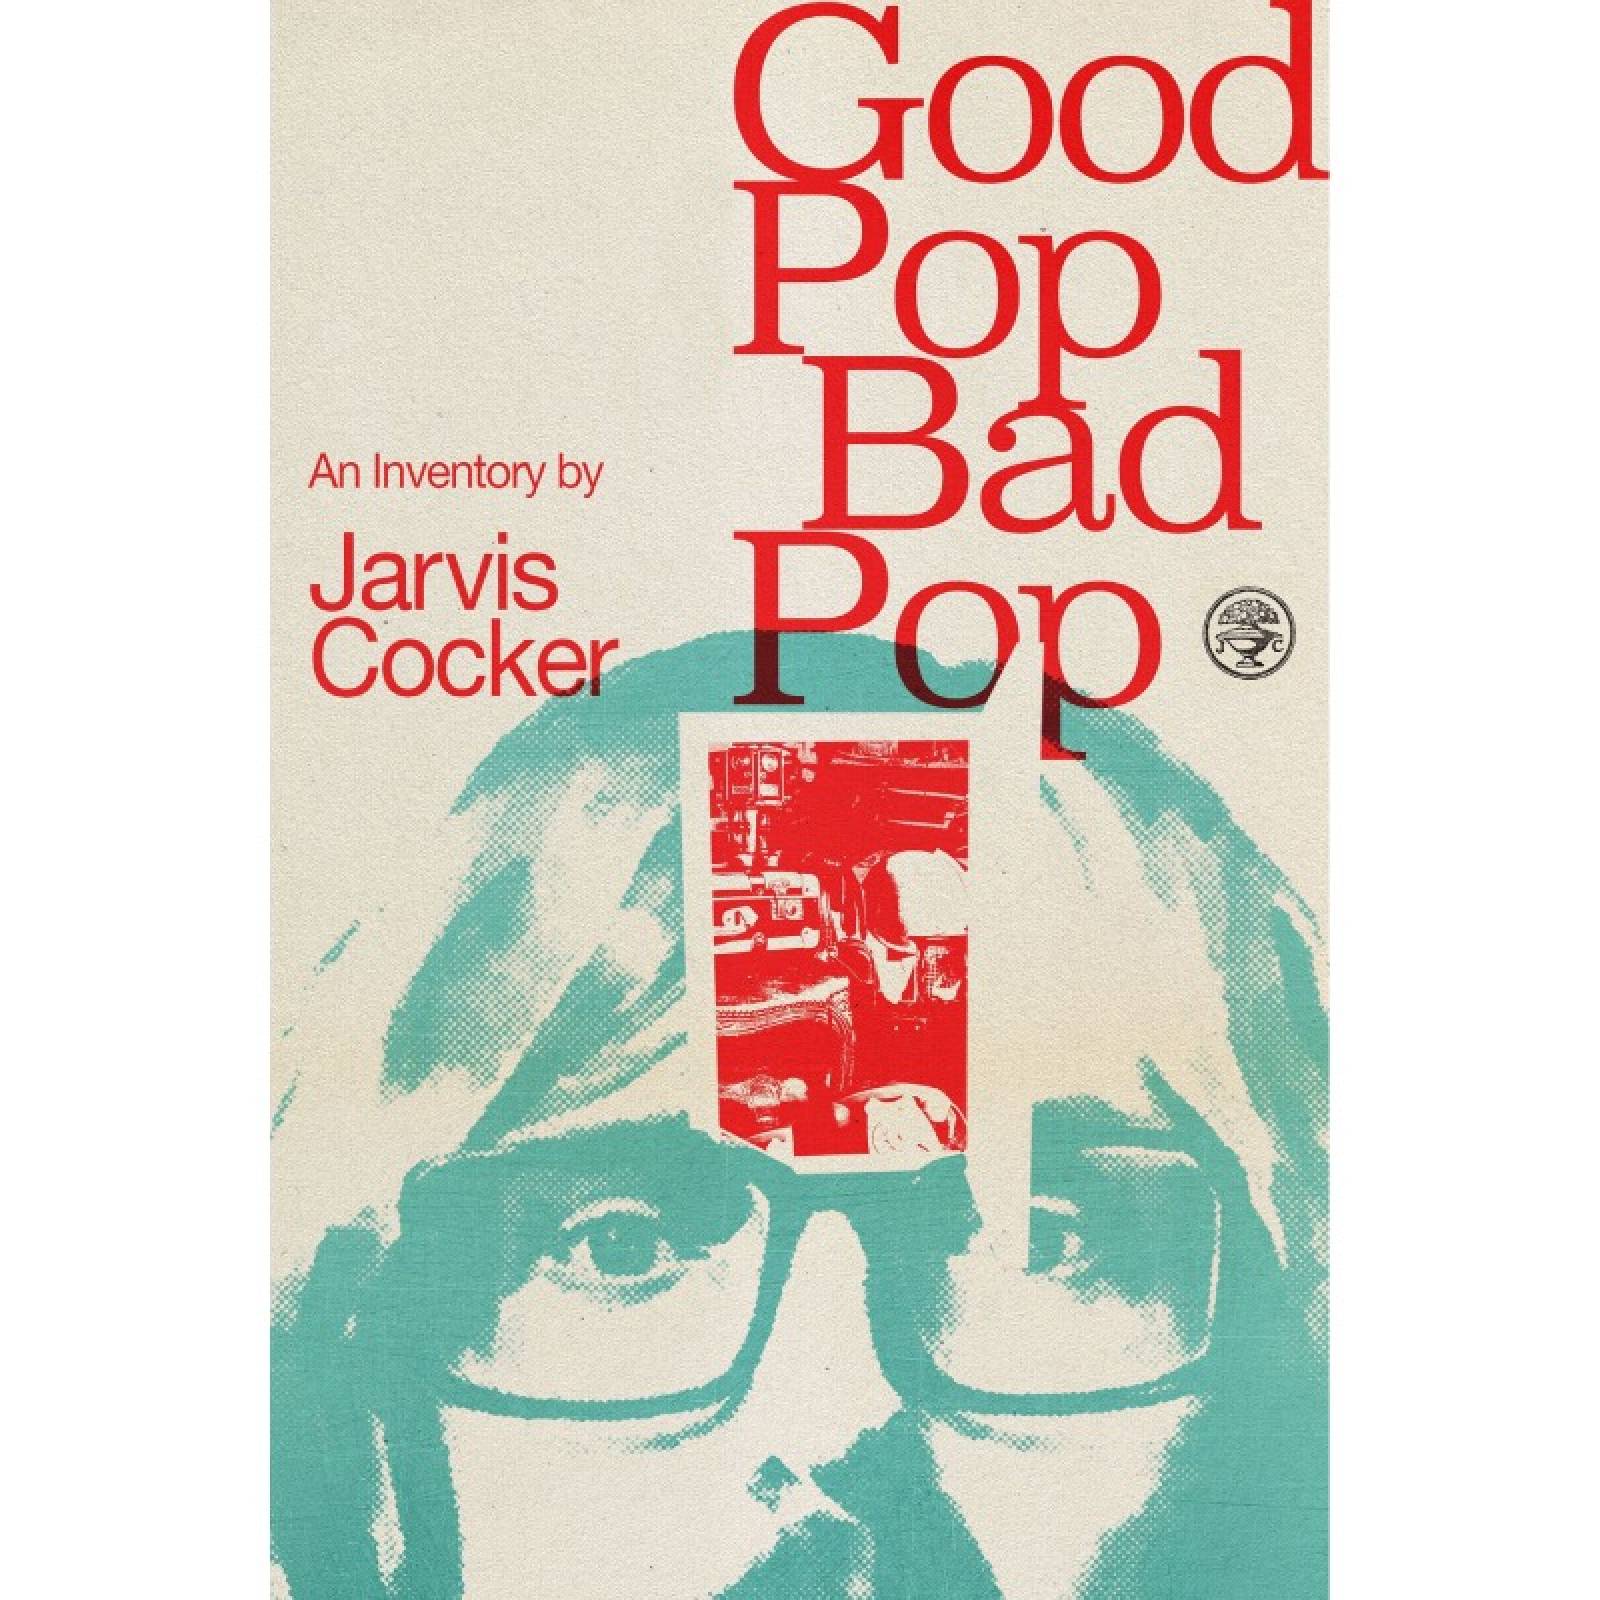 Good Pop Bad Pop By Jarvis Cocker - Hardback Book thumbnails